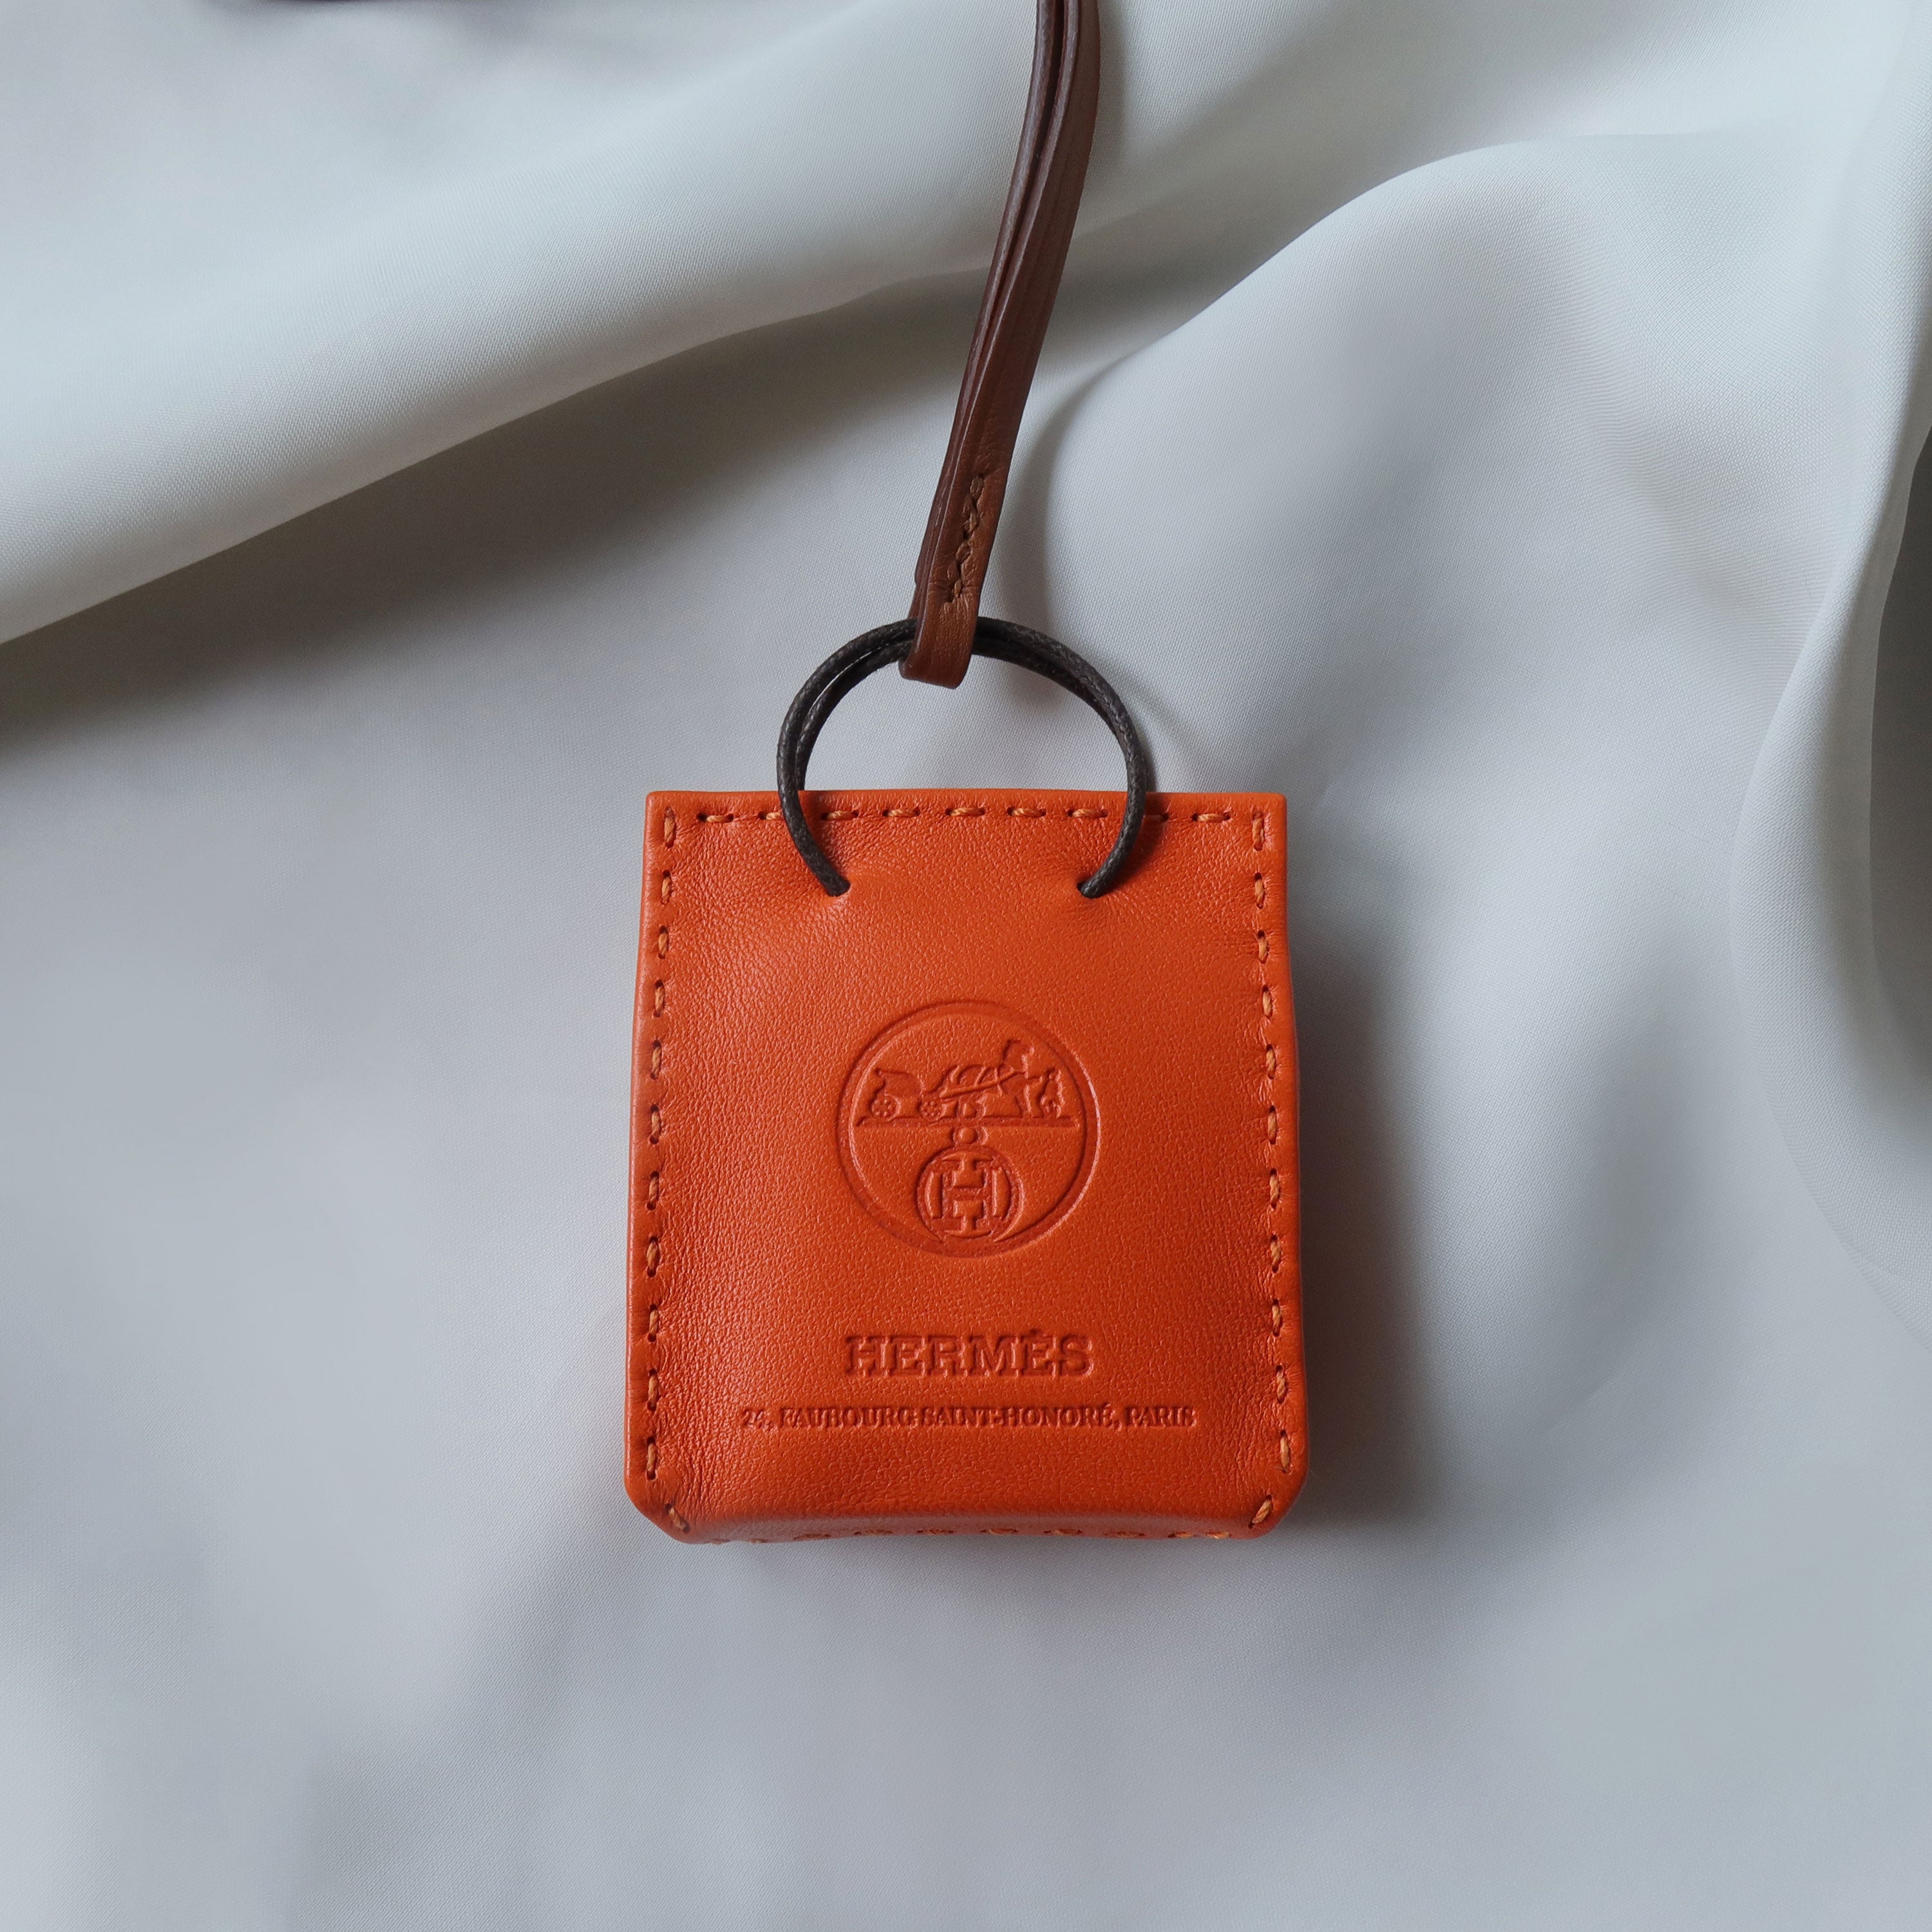 Hermes Orange Bag Charm